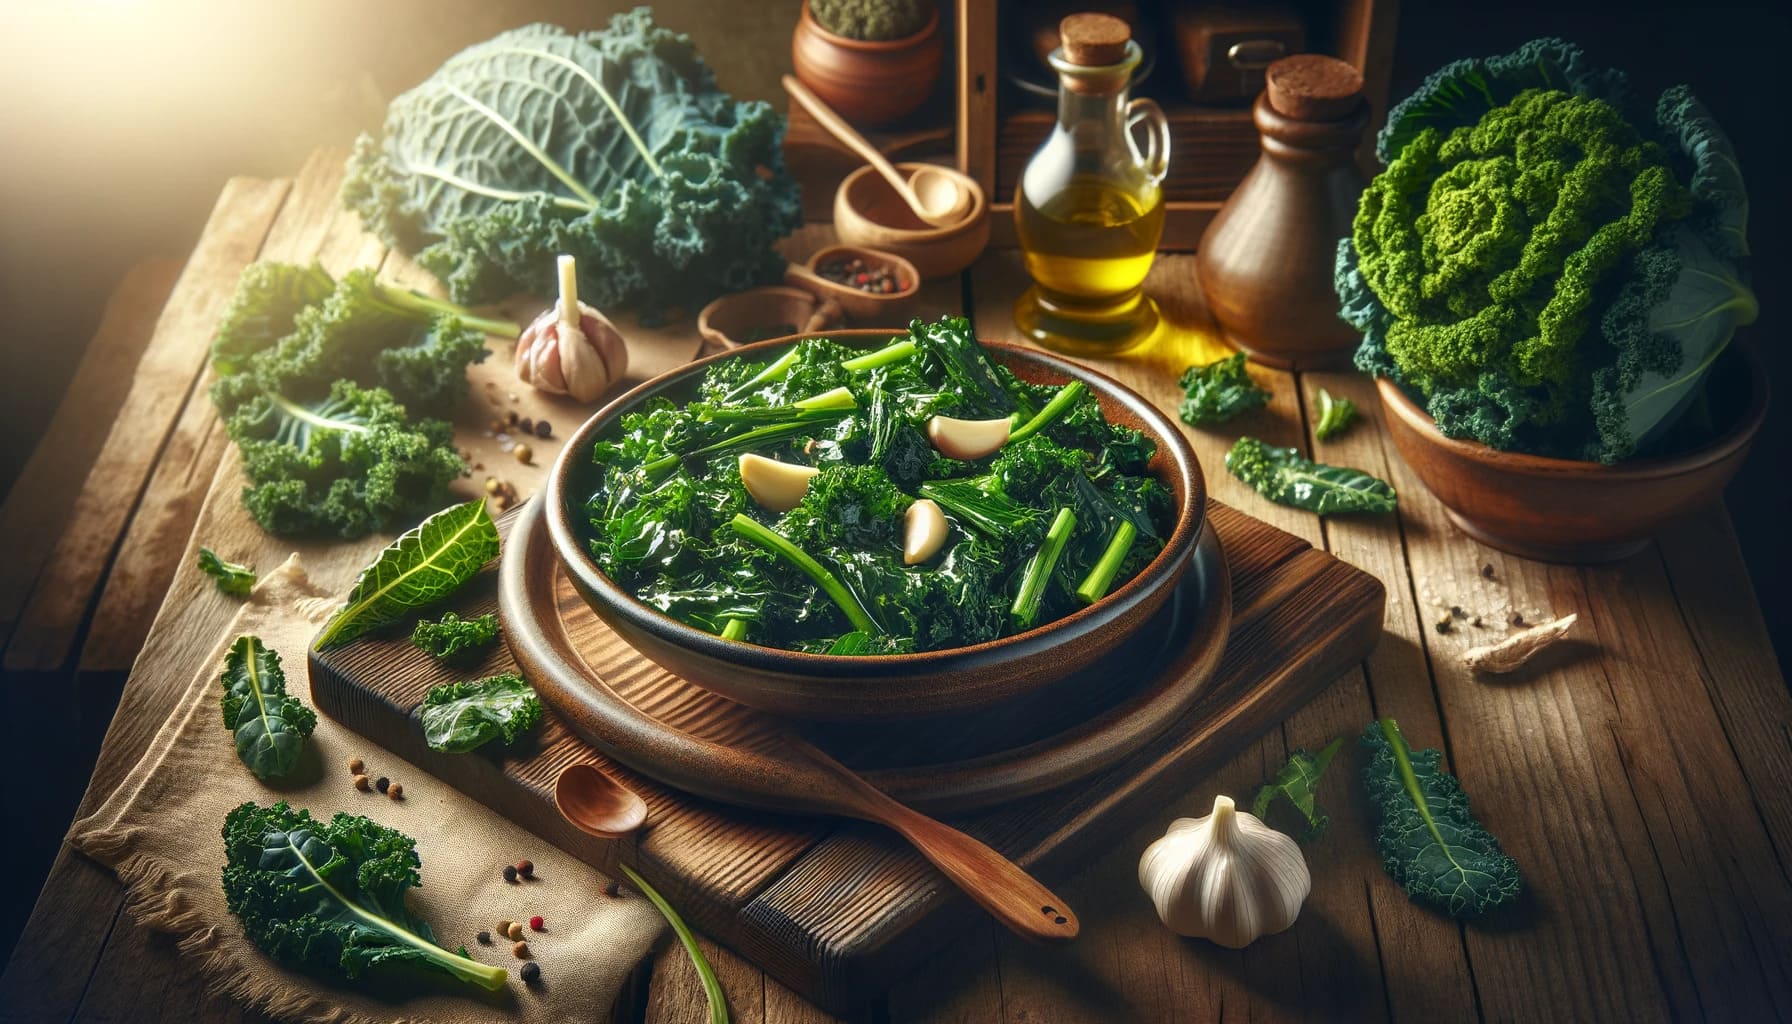 Kale (Winter Greens) With Garlic